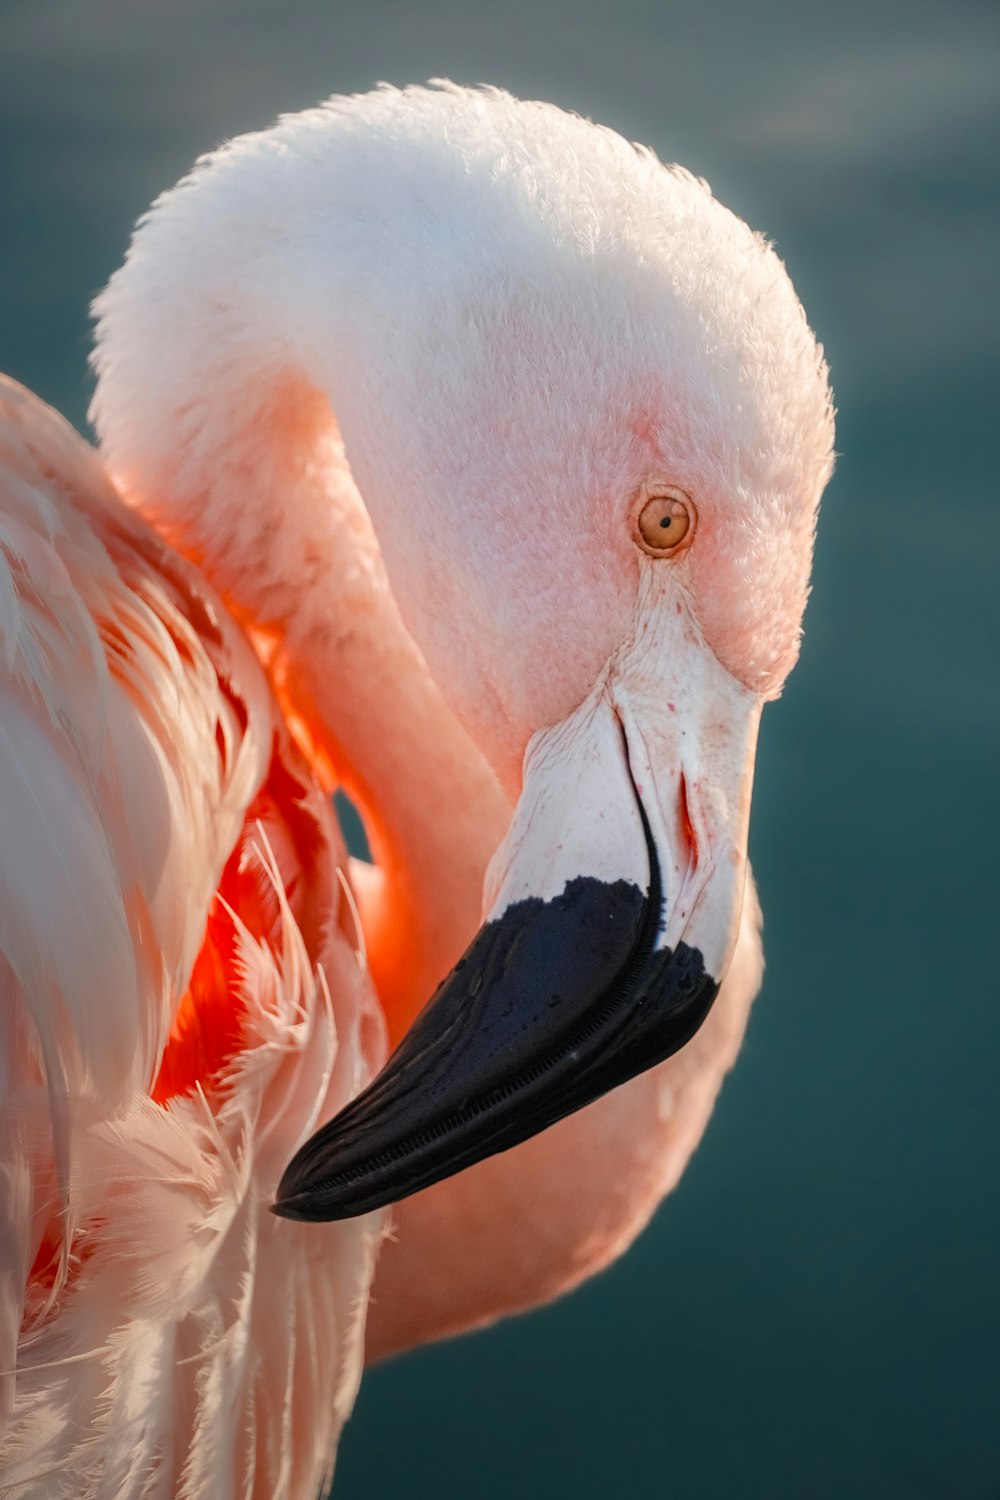 a close up of a pink flamingo with a black beak